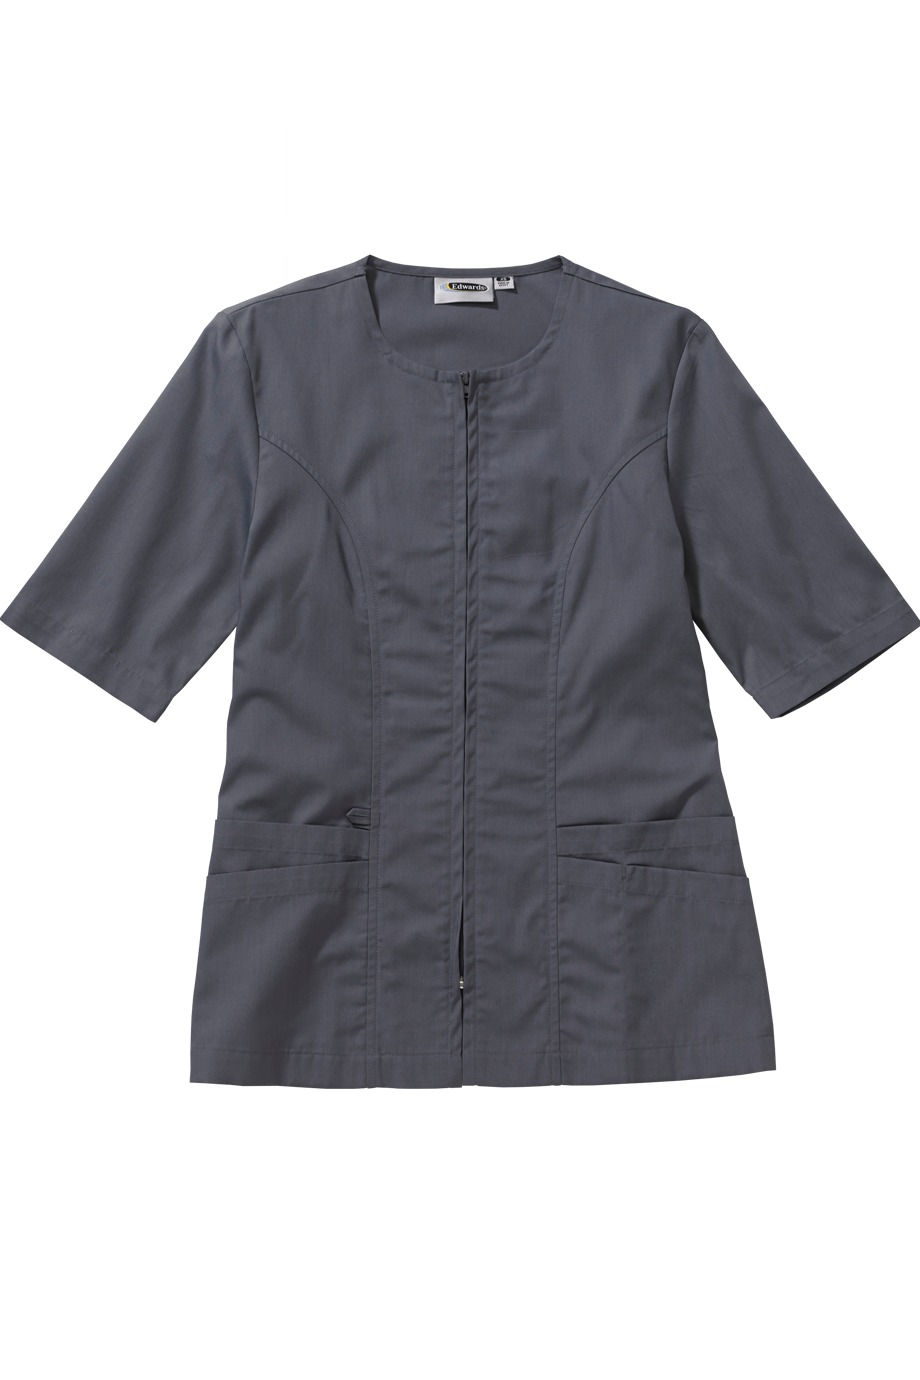 Edwards Garment 7887 - Housekeeping Zip Tunic